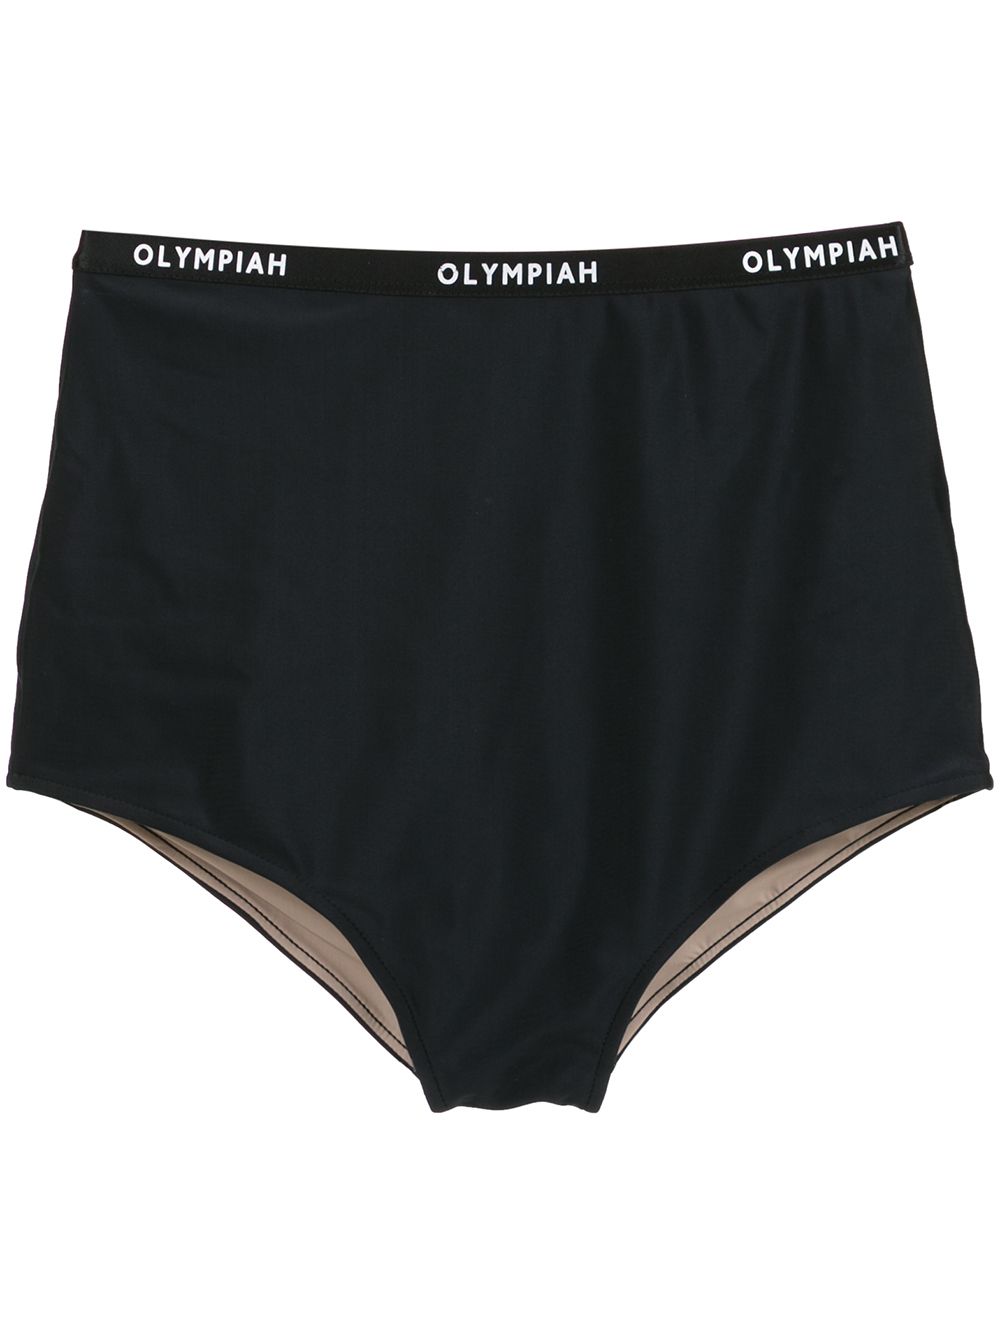 Olympiah hot pants bikini bottoms - Black von Olympiah